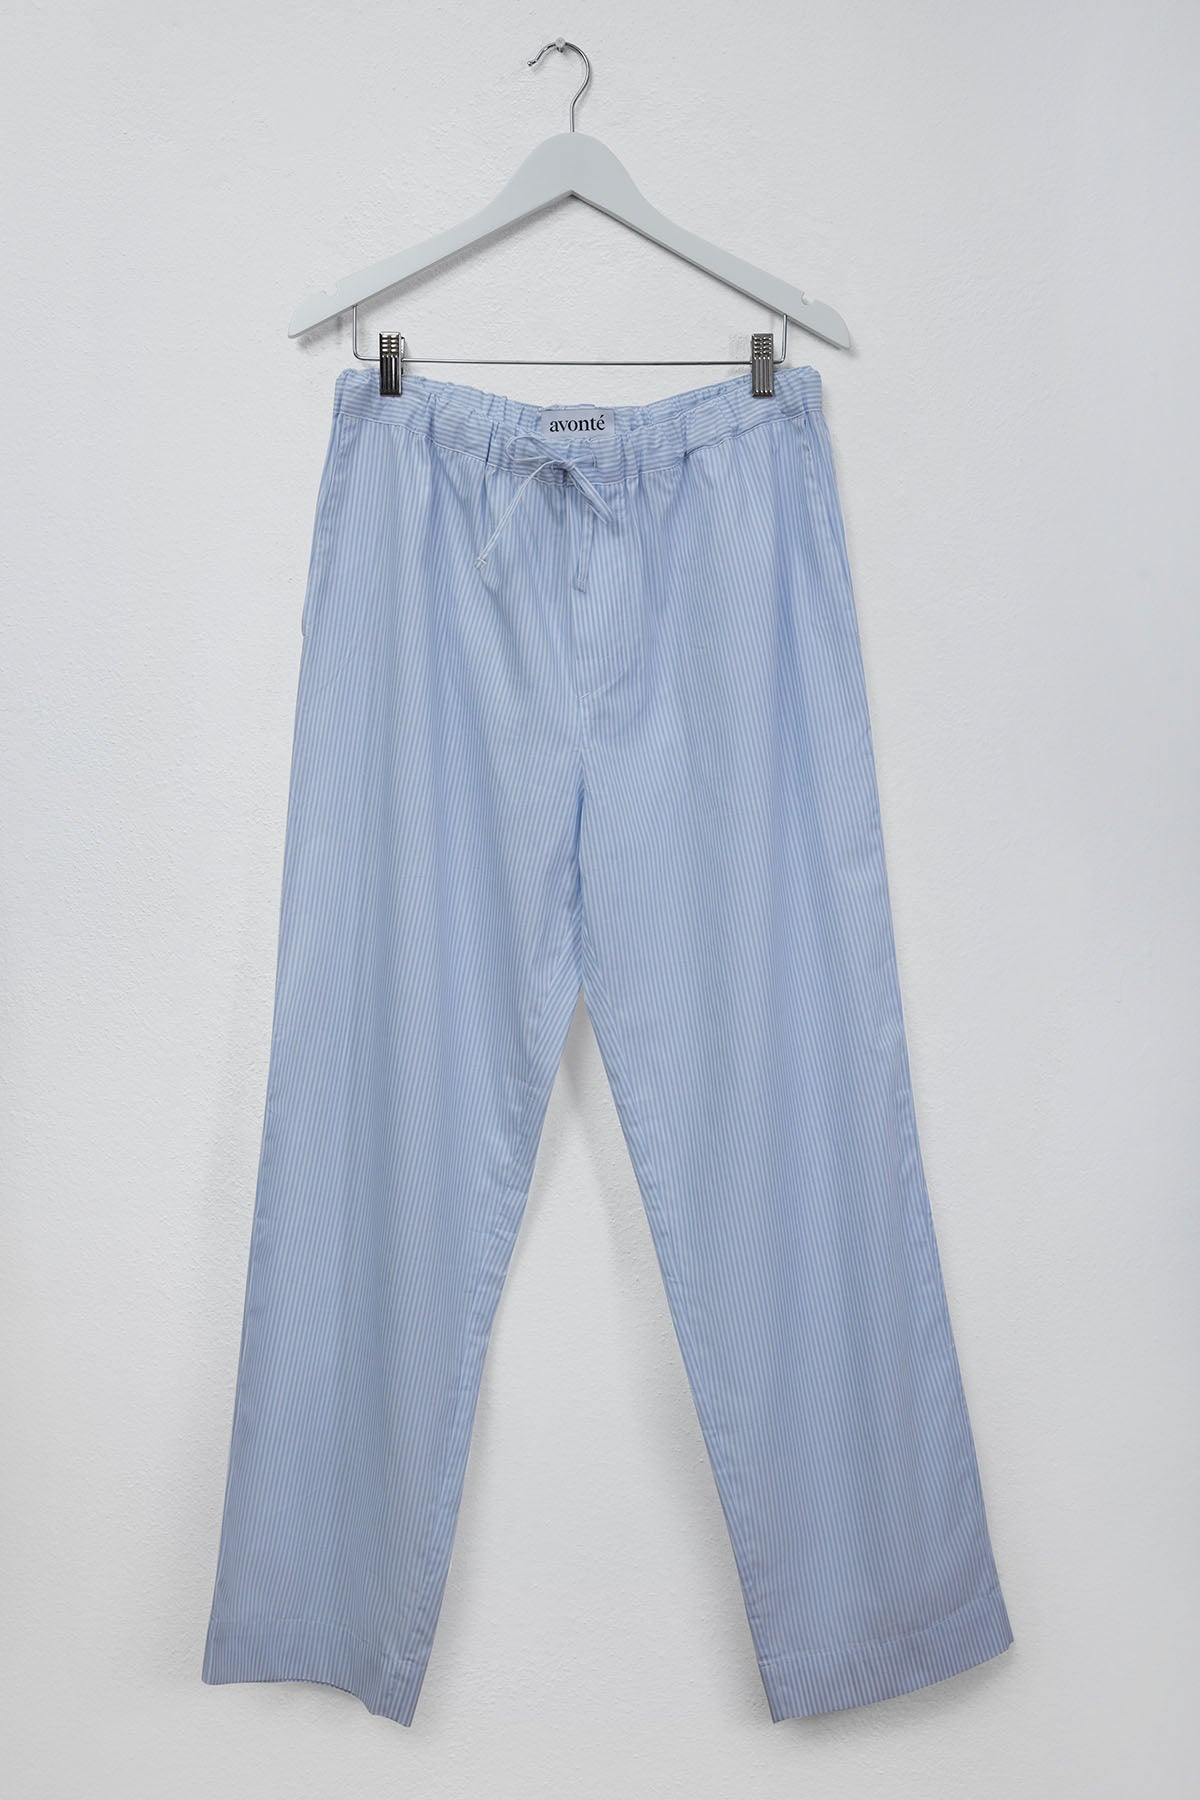 sustainable pyjama pants in brave blue stripe